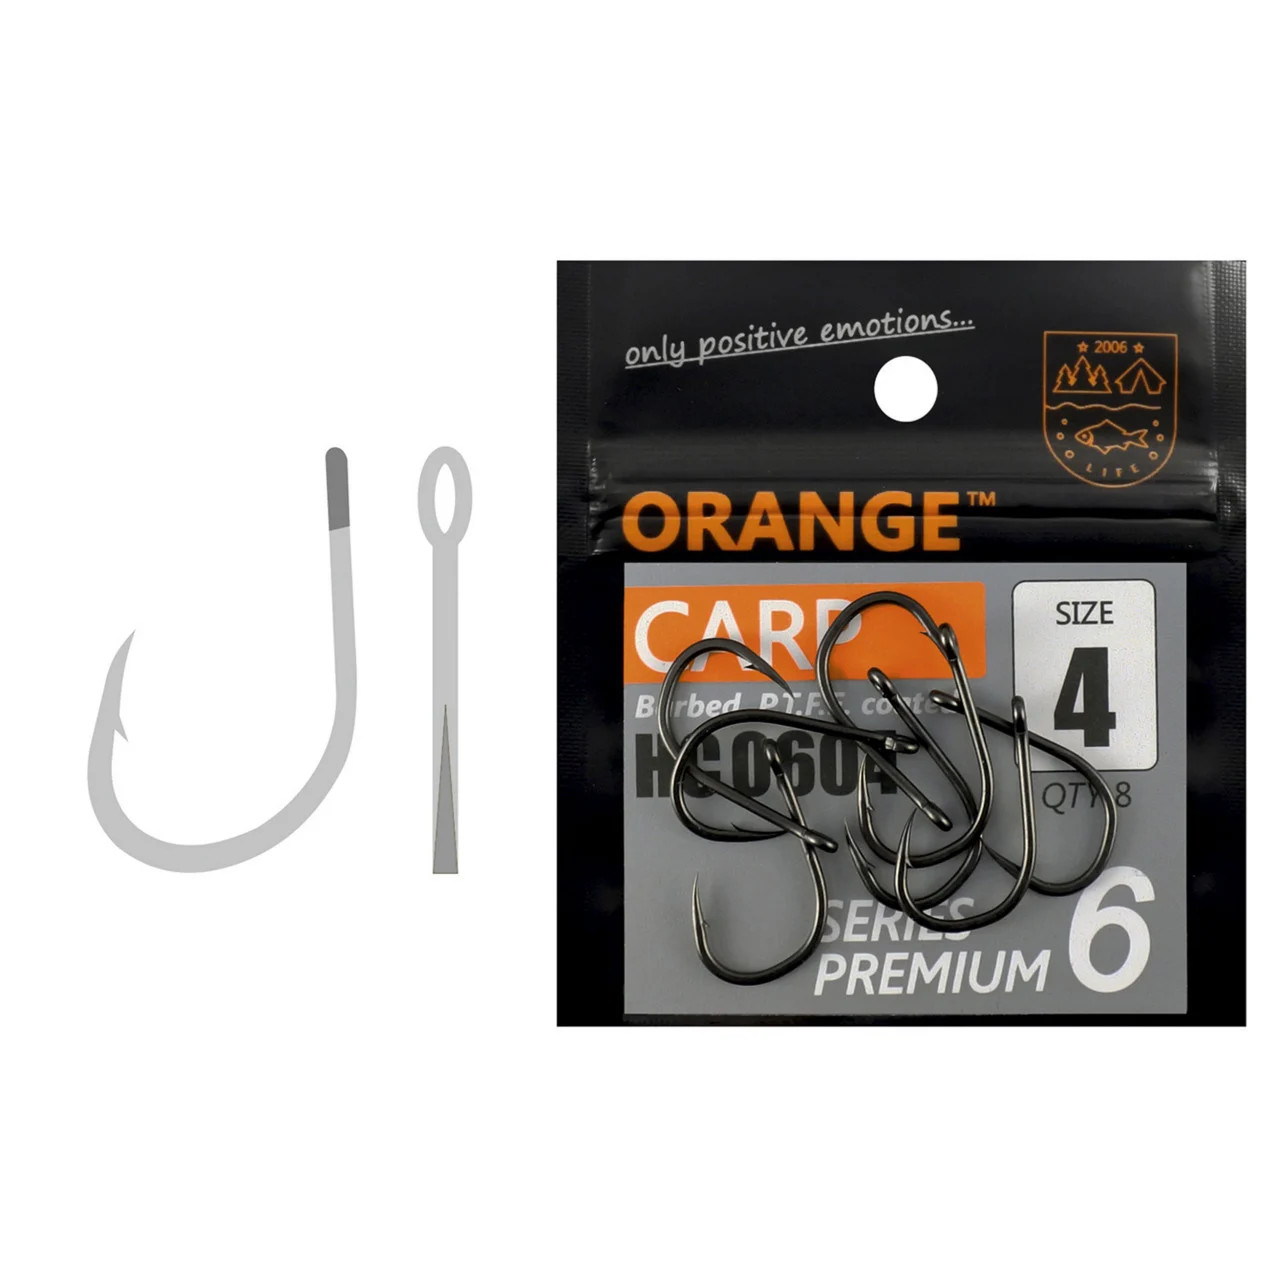 Carlig MMT Orange no.6 Carp PTFE Coated Series Premium 6 8buc